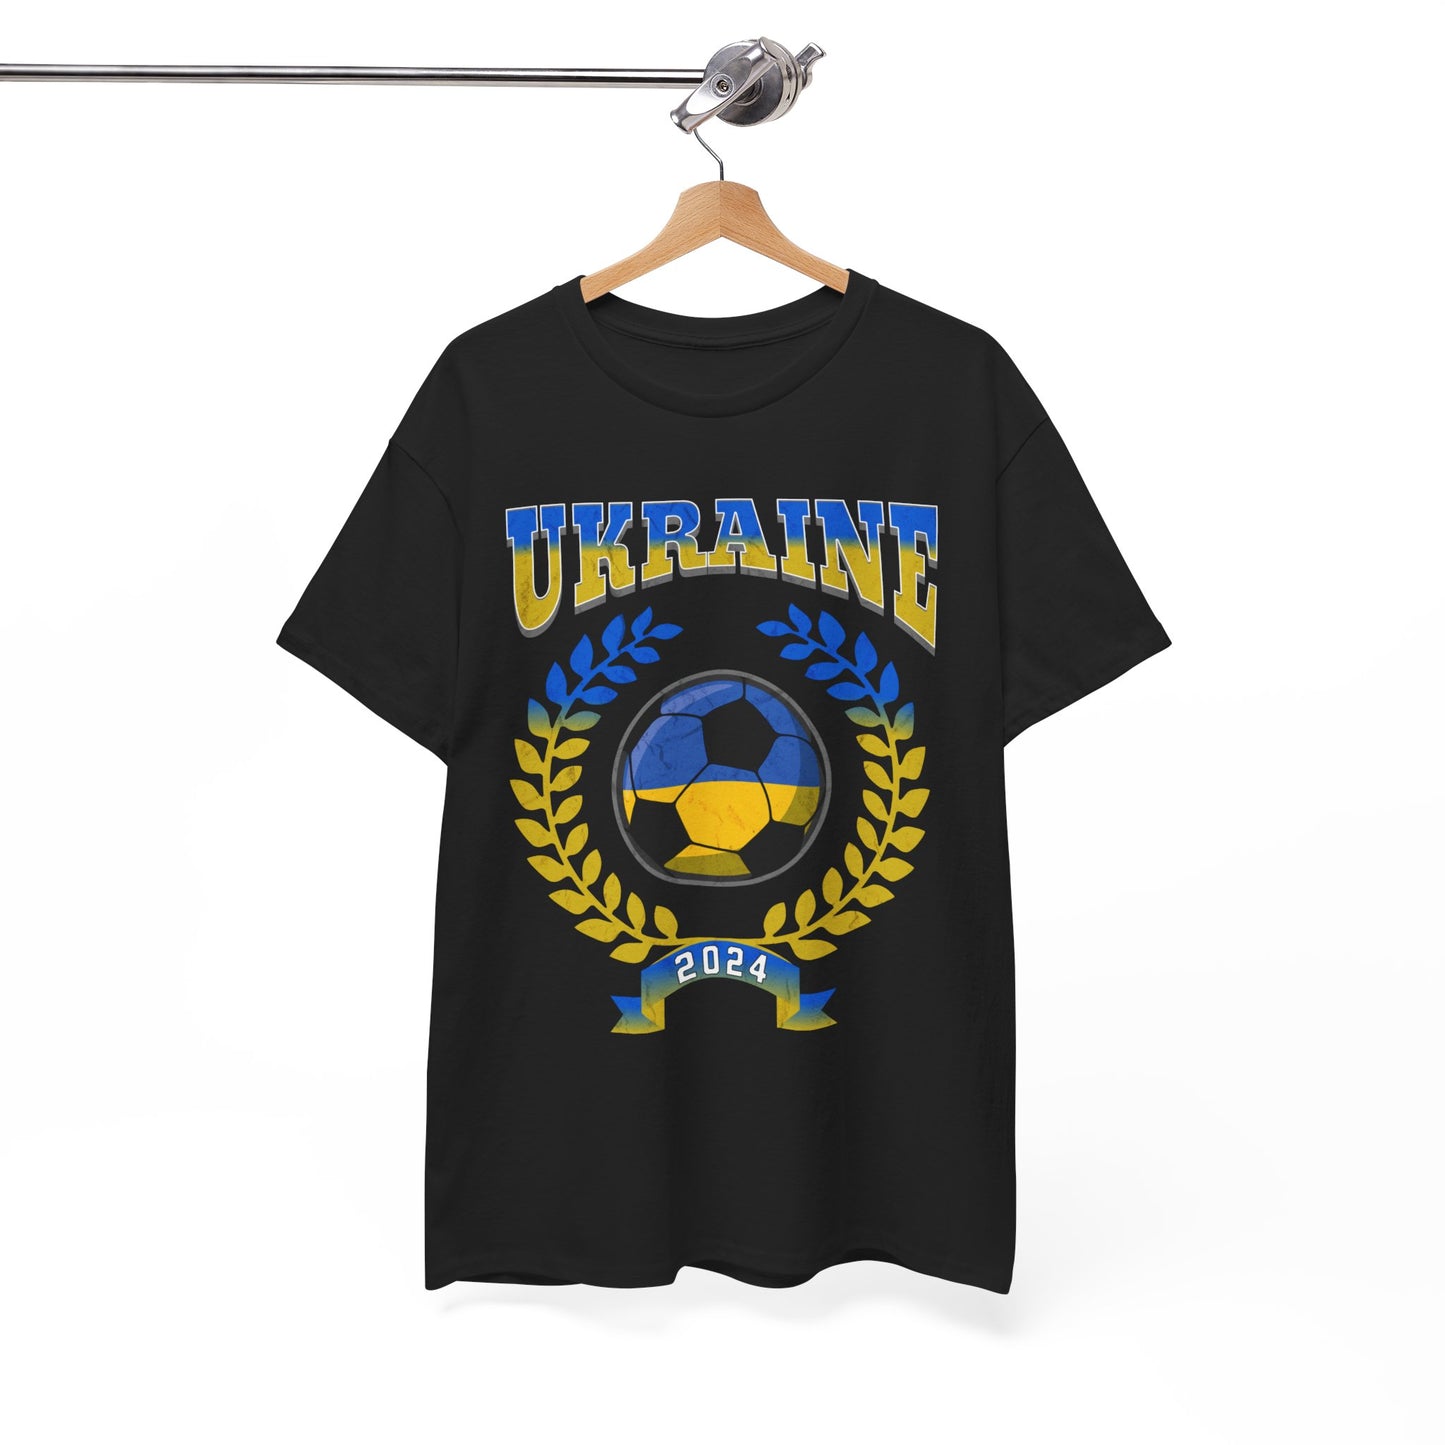 Ukraine 2024 Soccer Football Championship Games Ukrainian Team T-Shirt | Unisex Tee Shirt